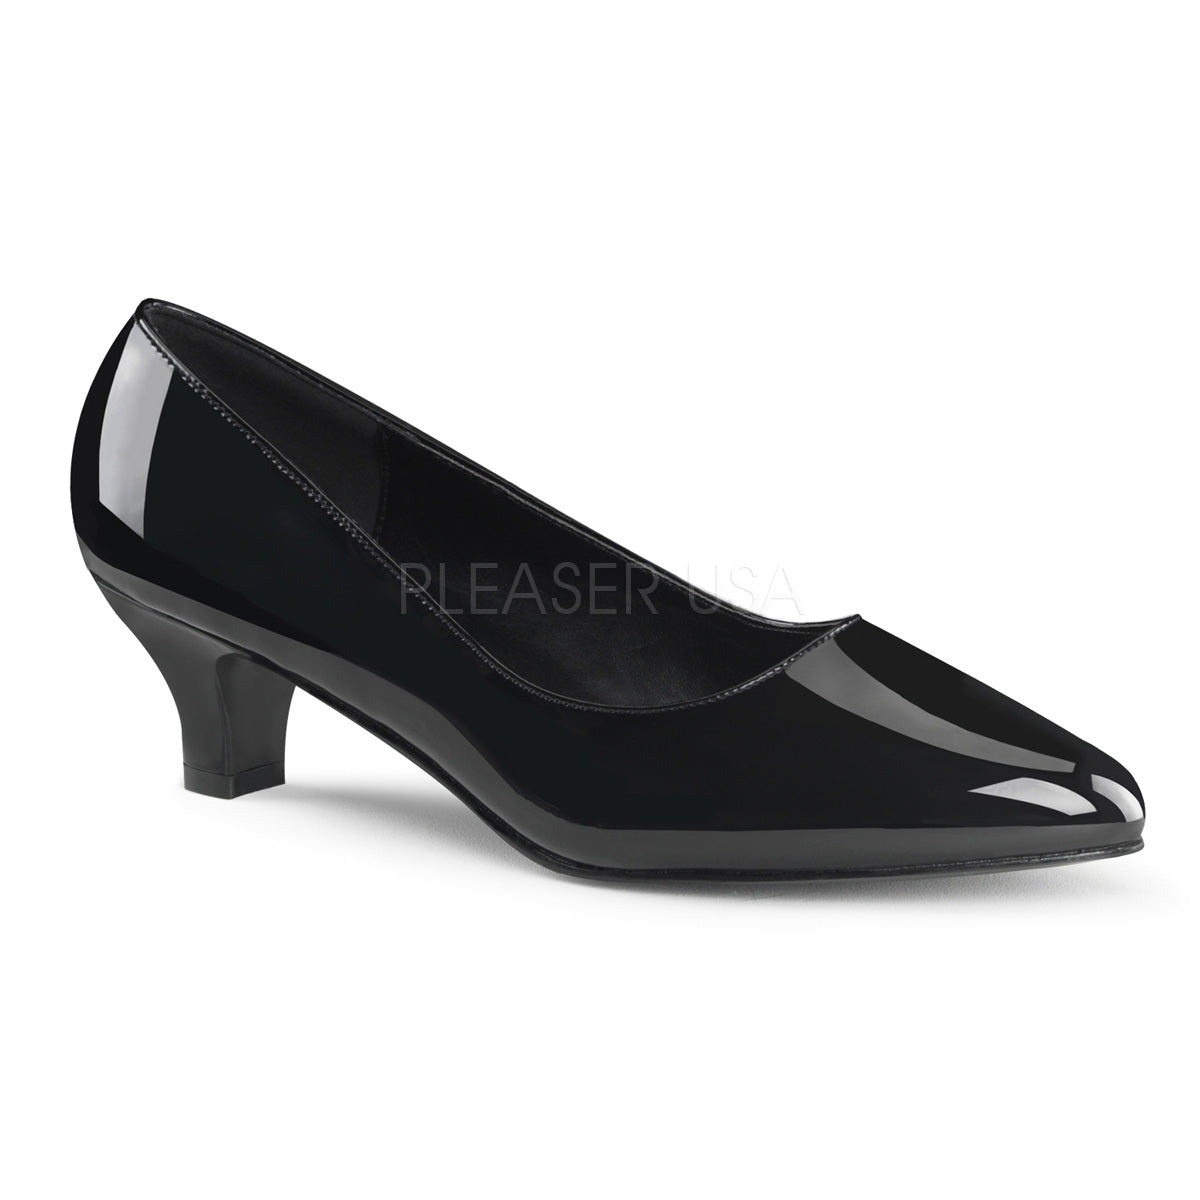 High heel pumps - pointed-toe classic black patent - Women's size 13 -  stiletto heel